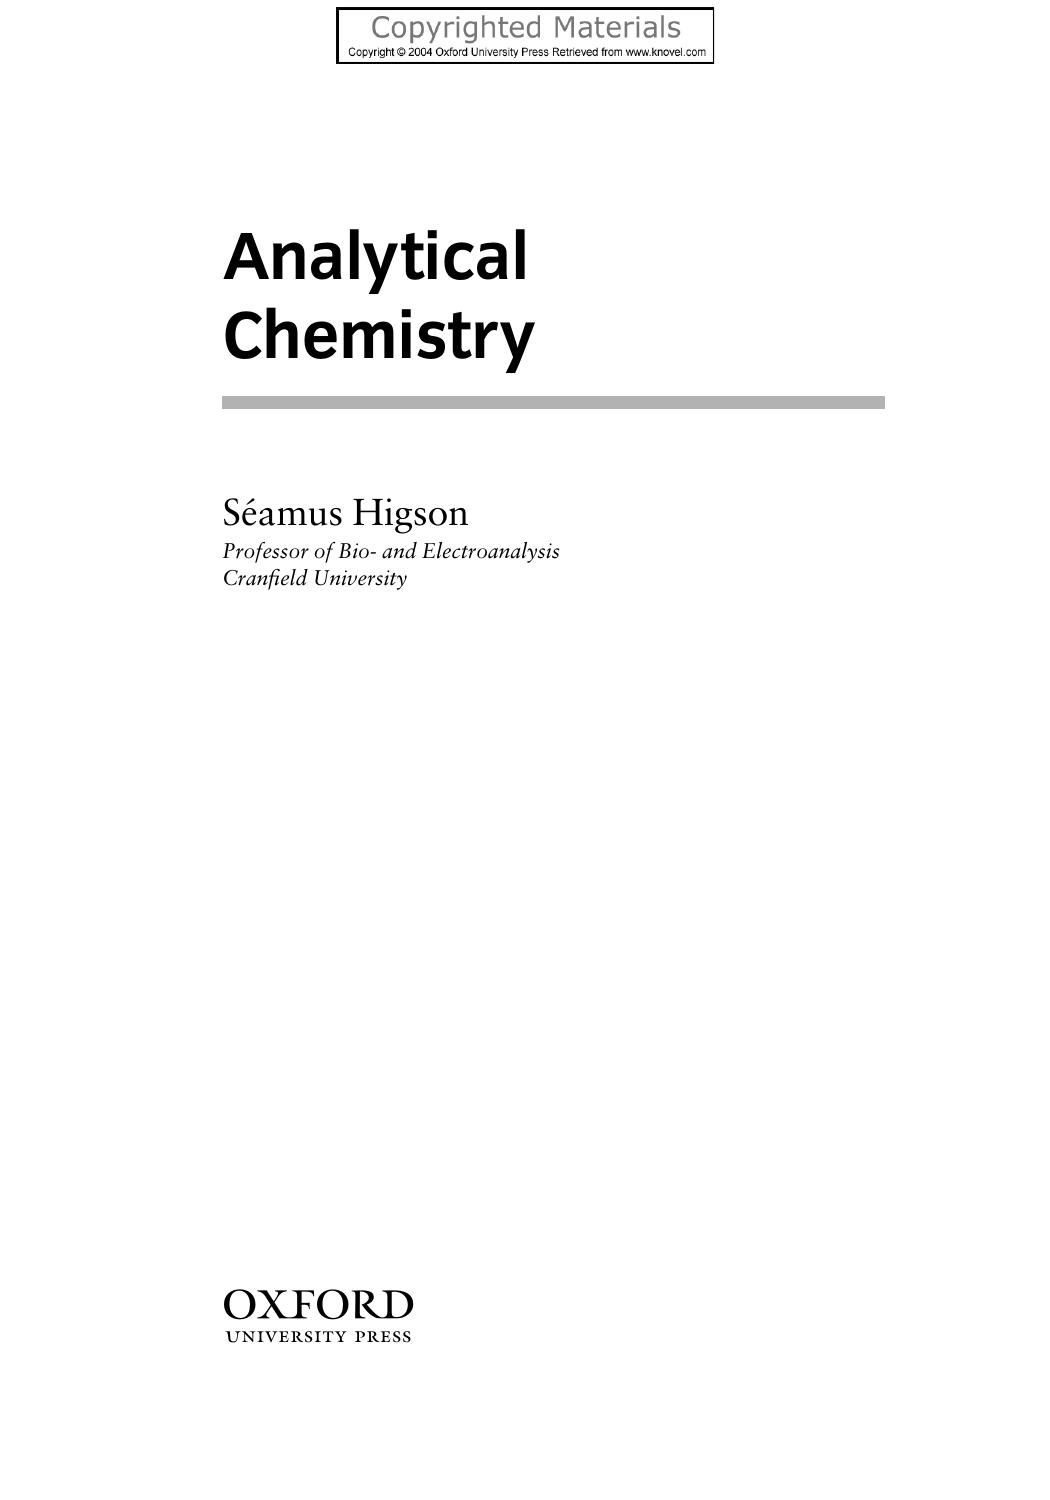 Analytical Chemistry 2004